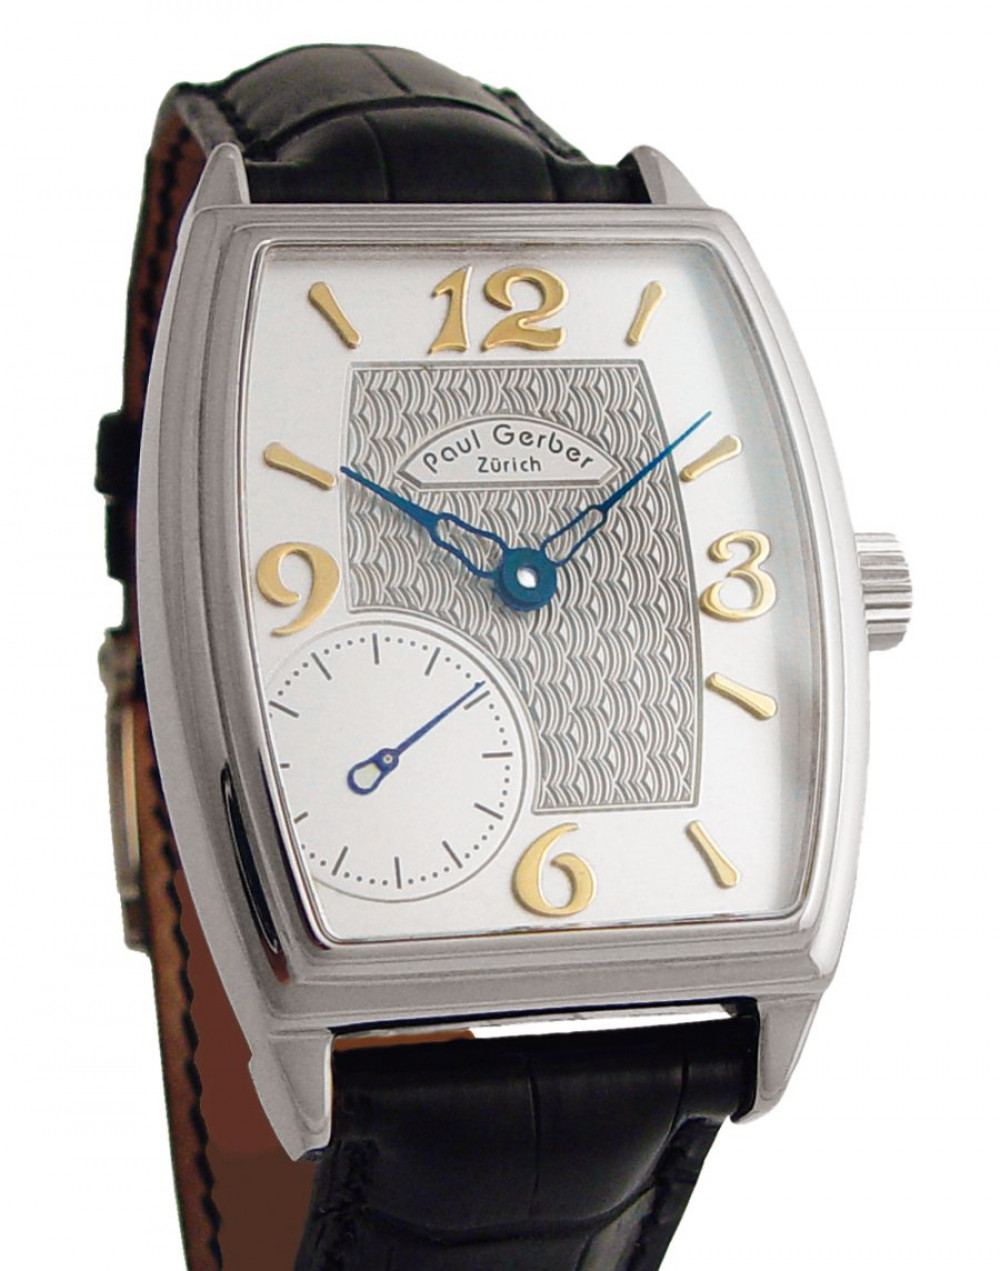 Zegarek firmy Paul Gerber, model Modell 33 Große Sekunde